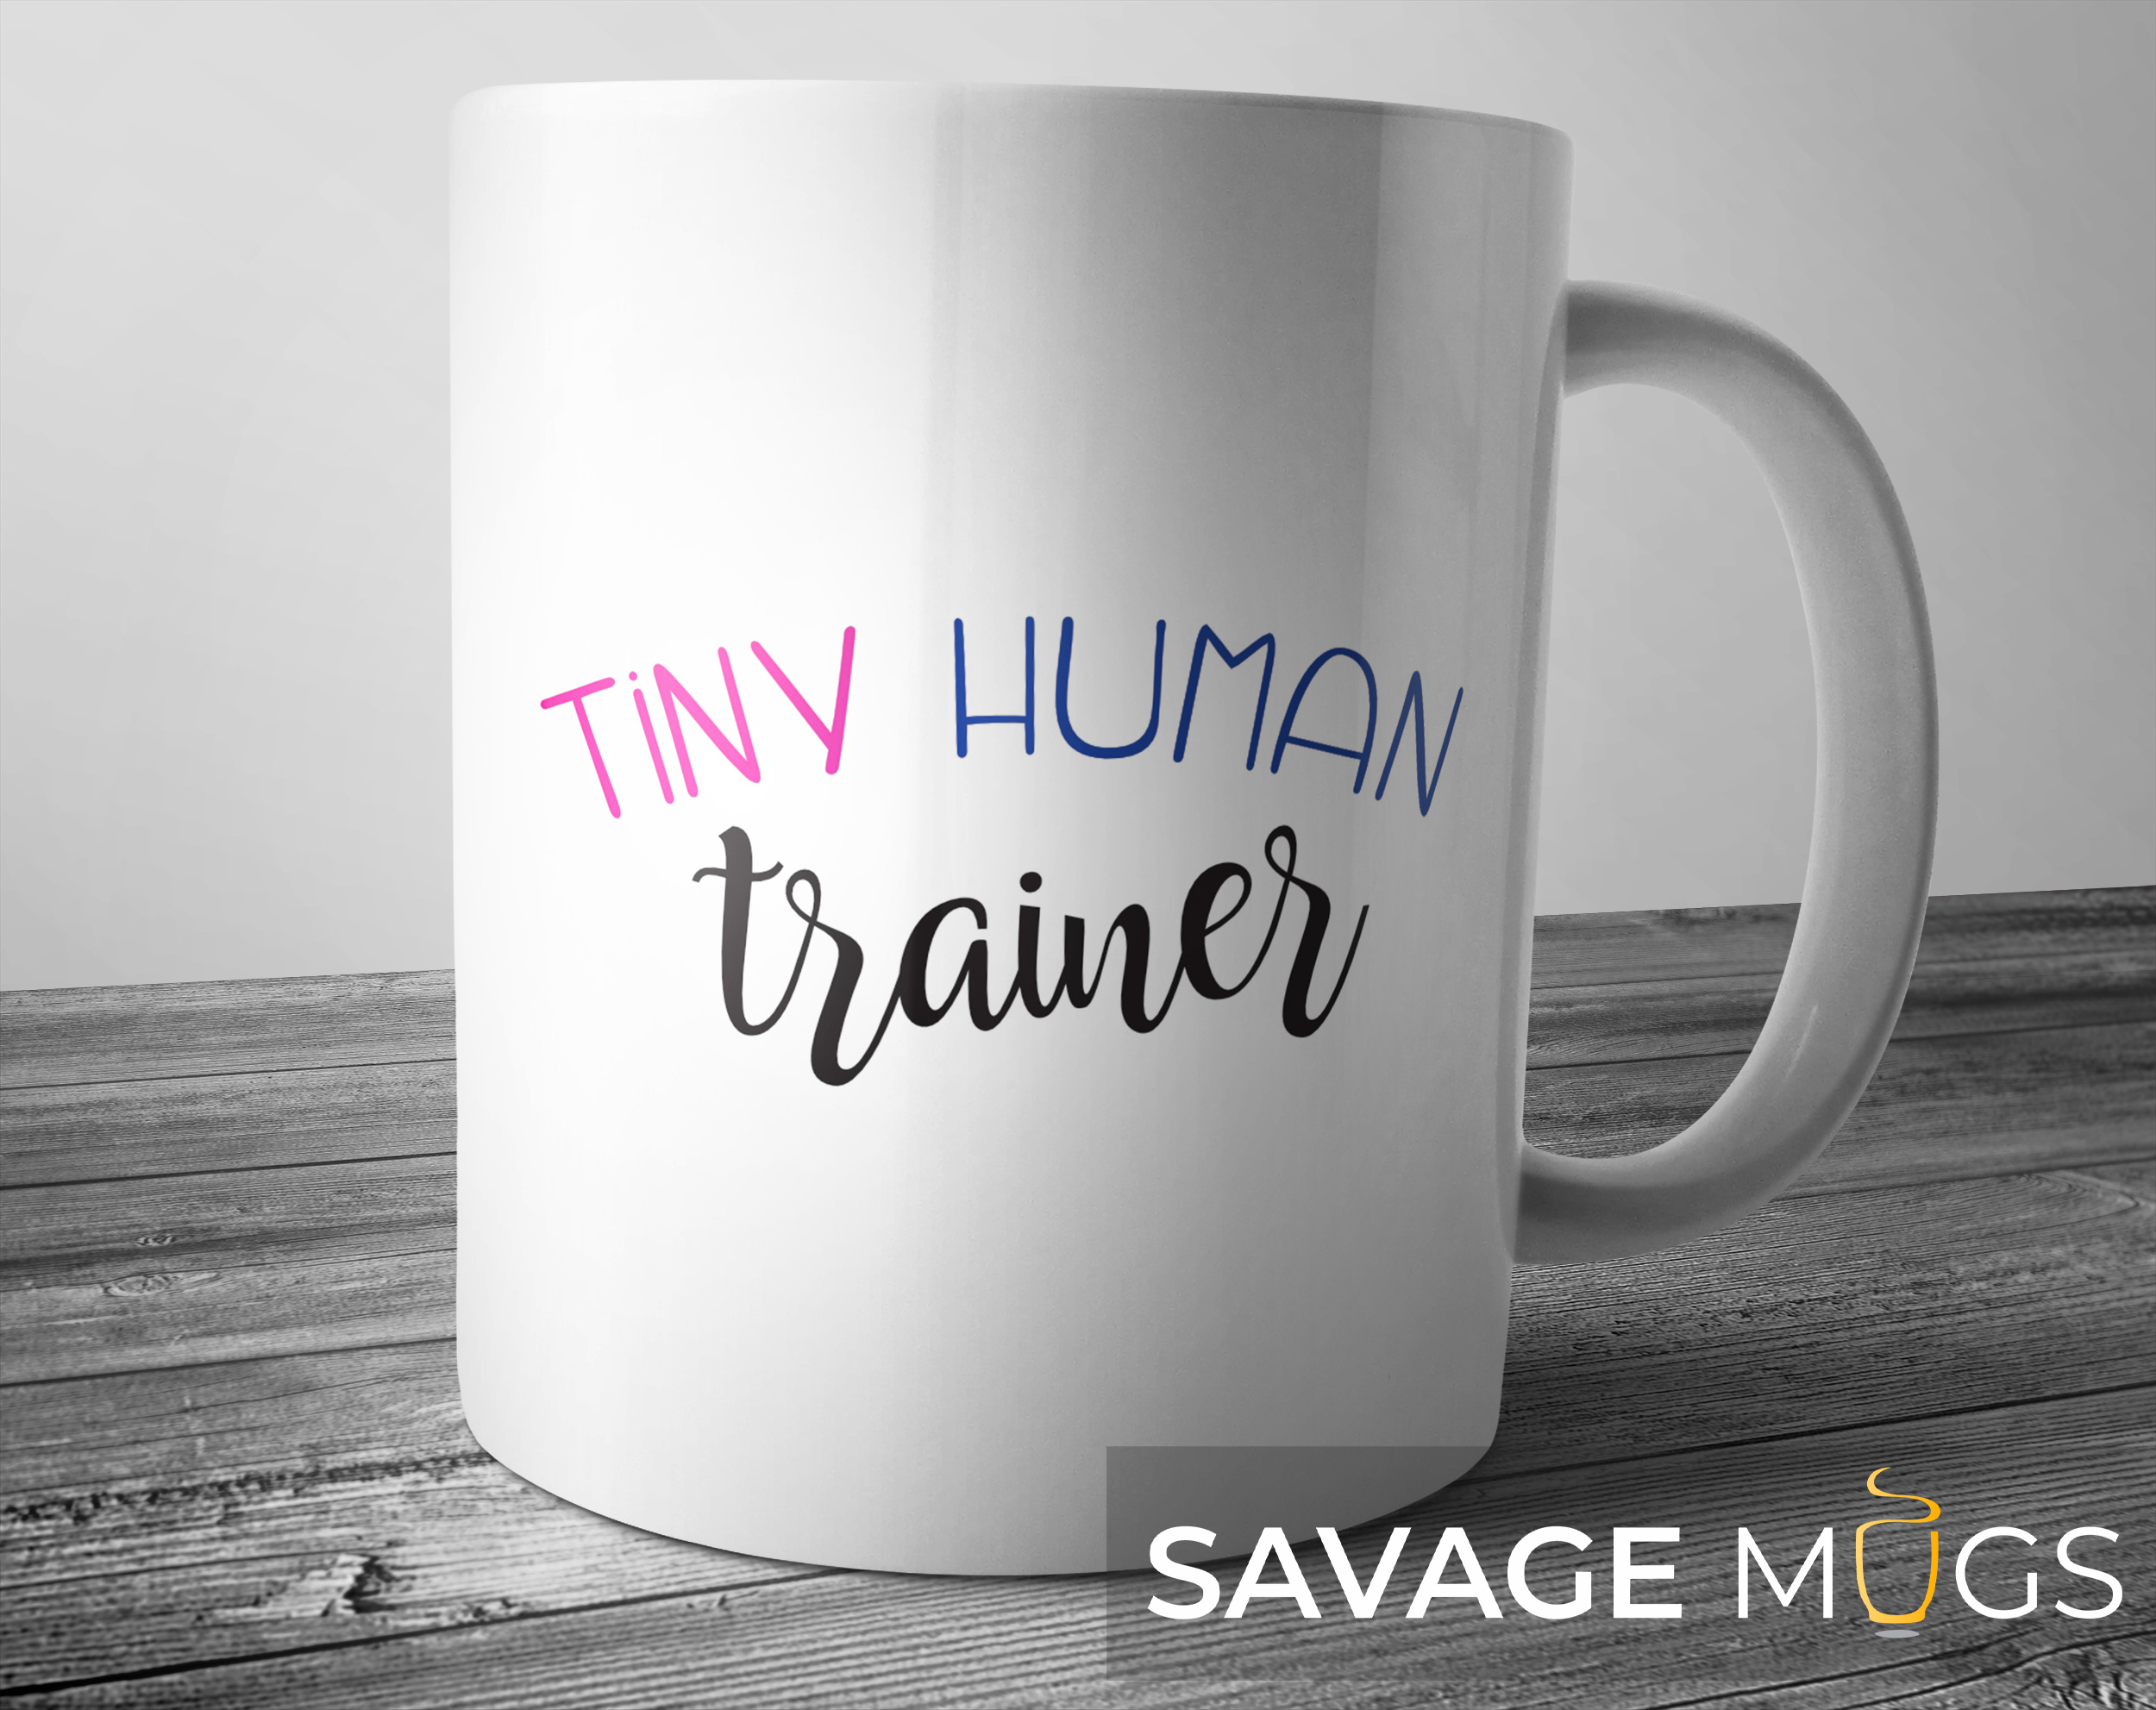 https://savagemugs.co.za/wp-content/uploads/2023/05/Tiny-Human-Trainer.jpg